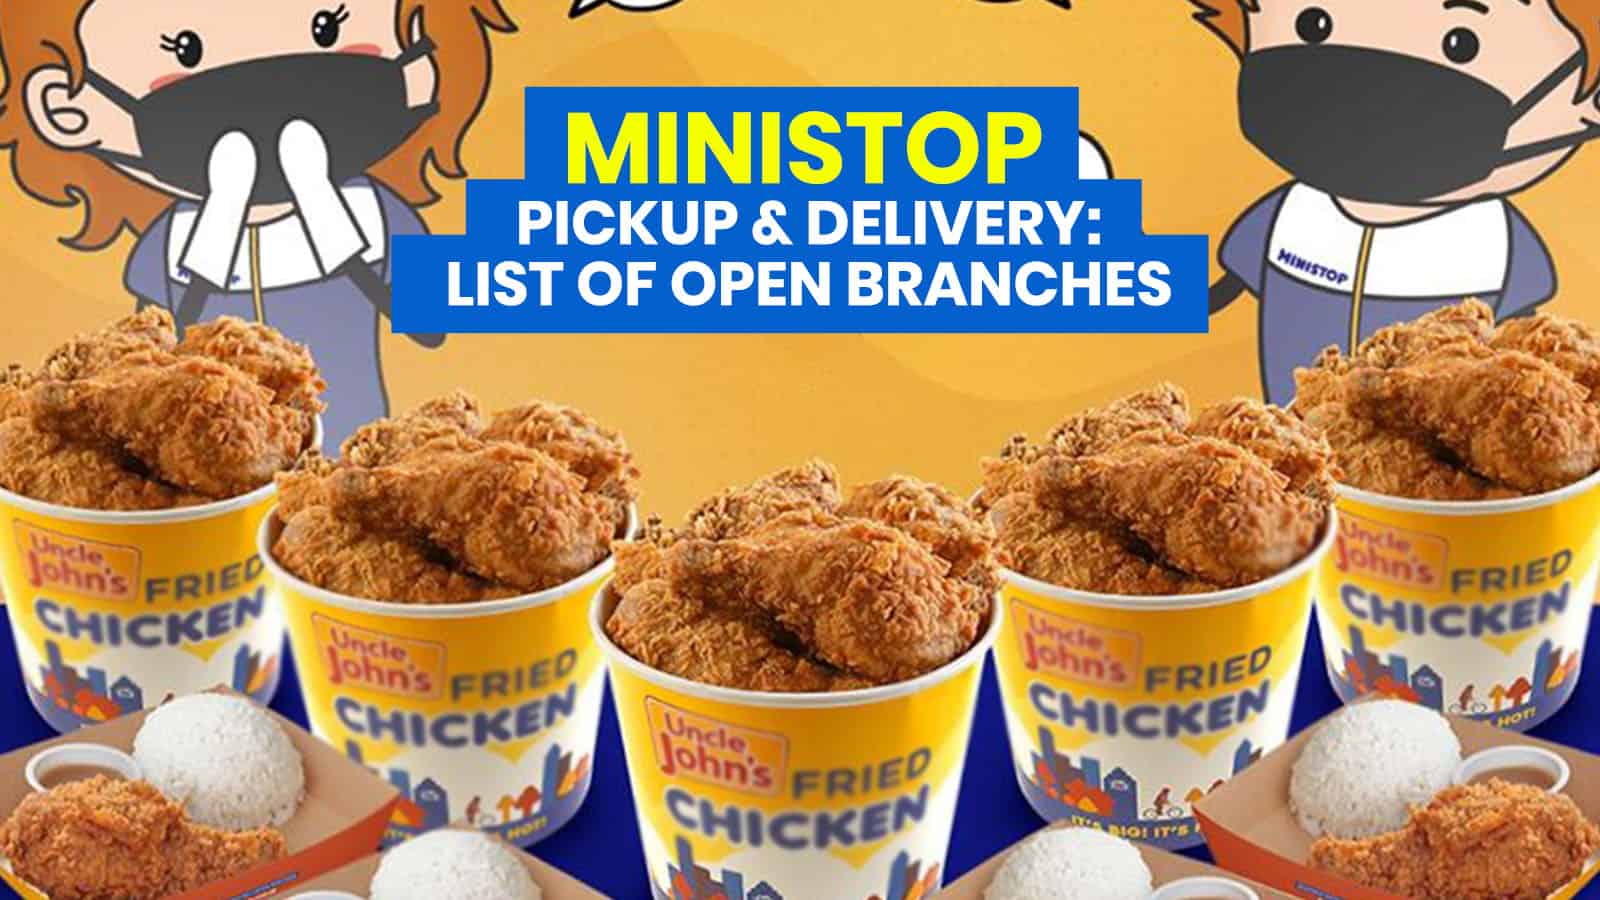 MINISTOP送货和取货:开放分店列表+冷冻包菜单